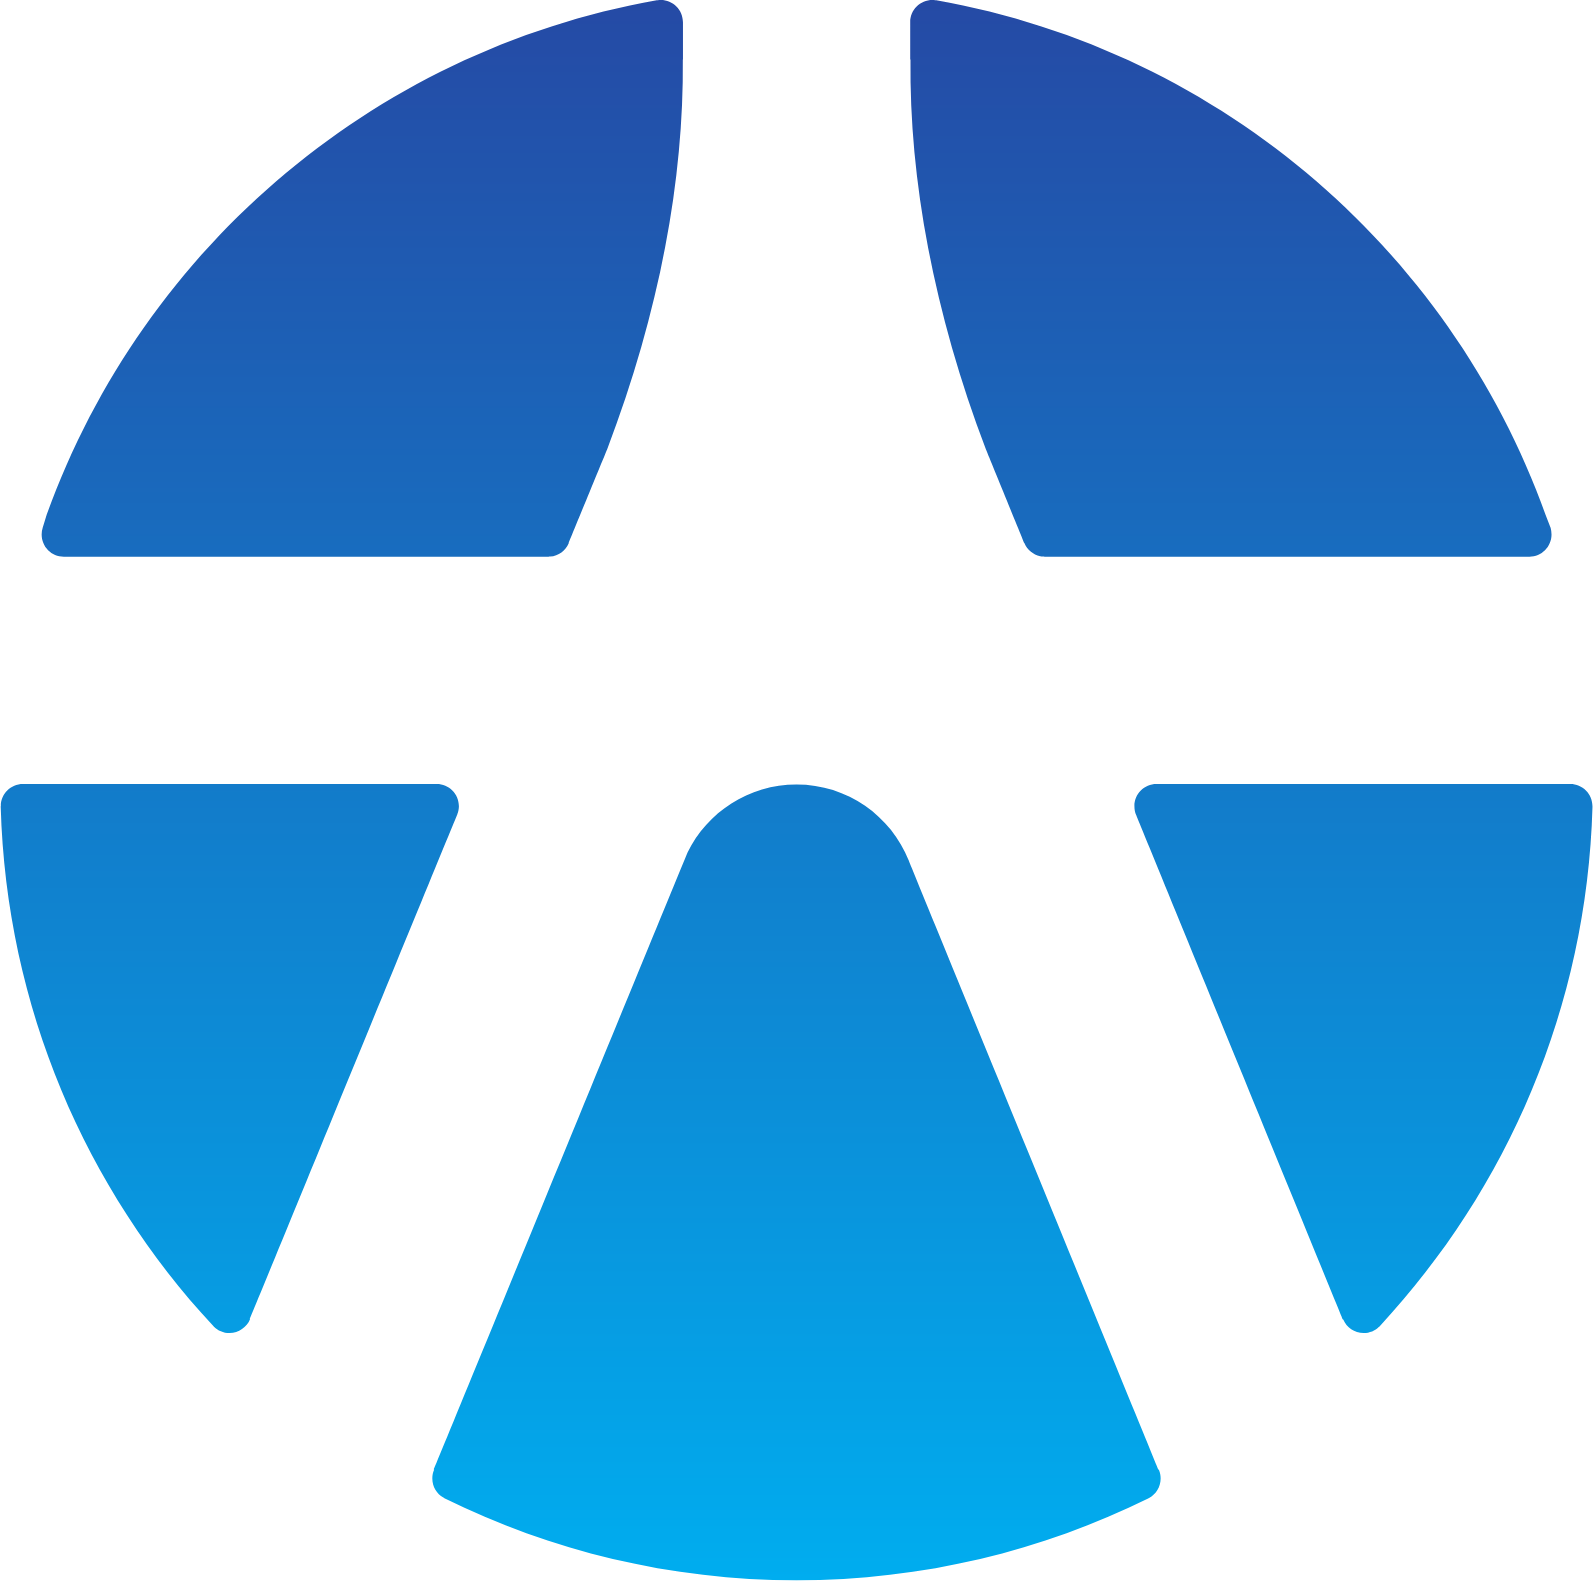 Yuanta Financial Holding logo (PNG transparent)